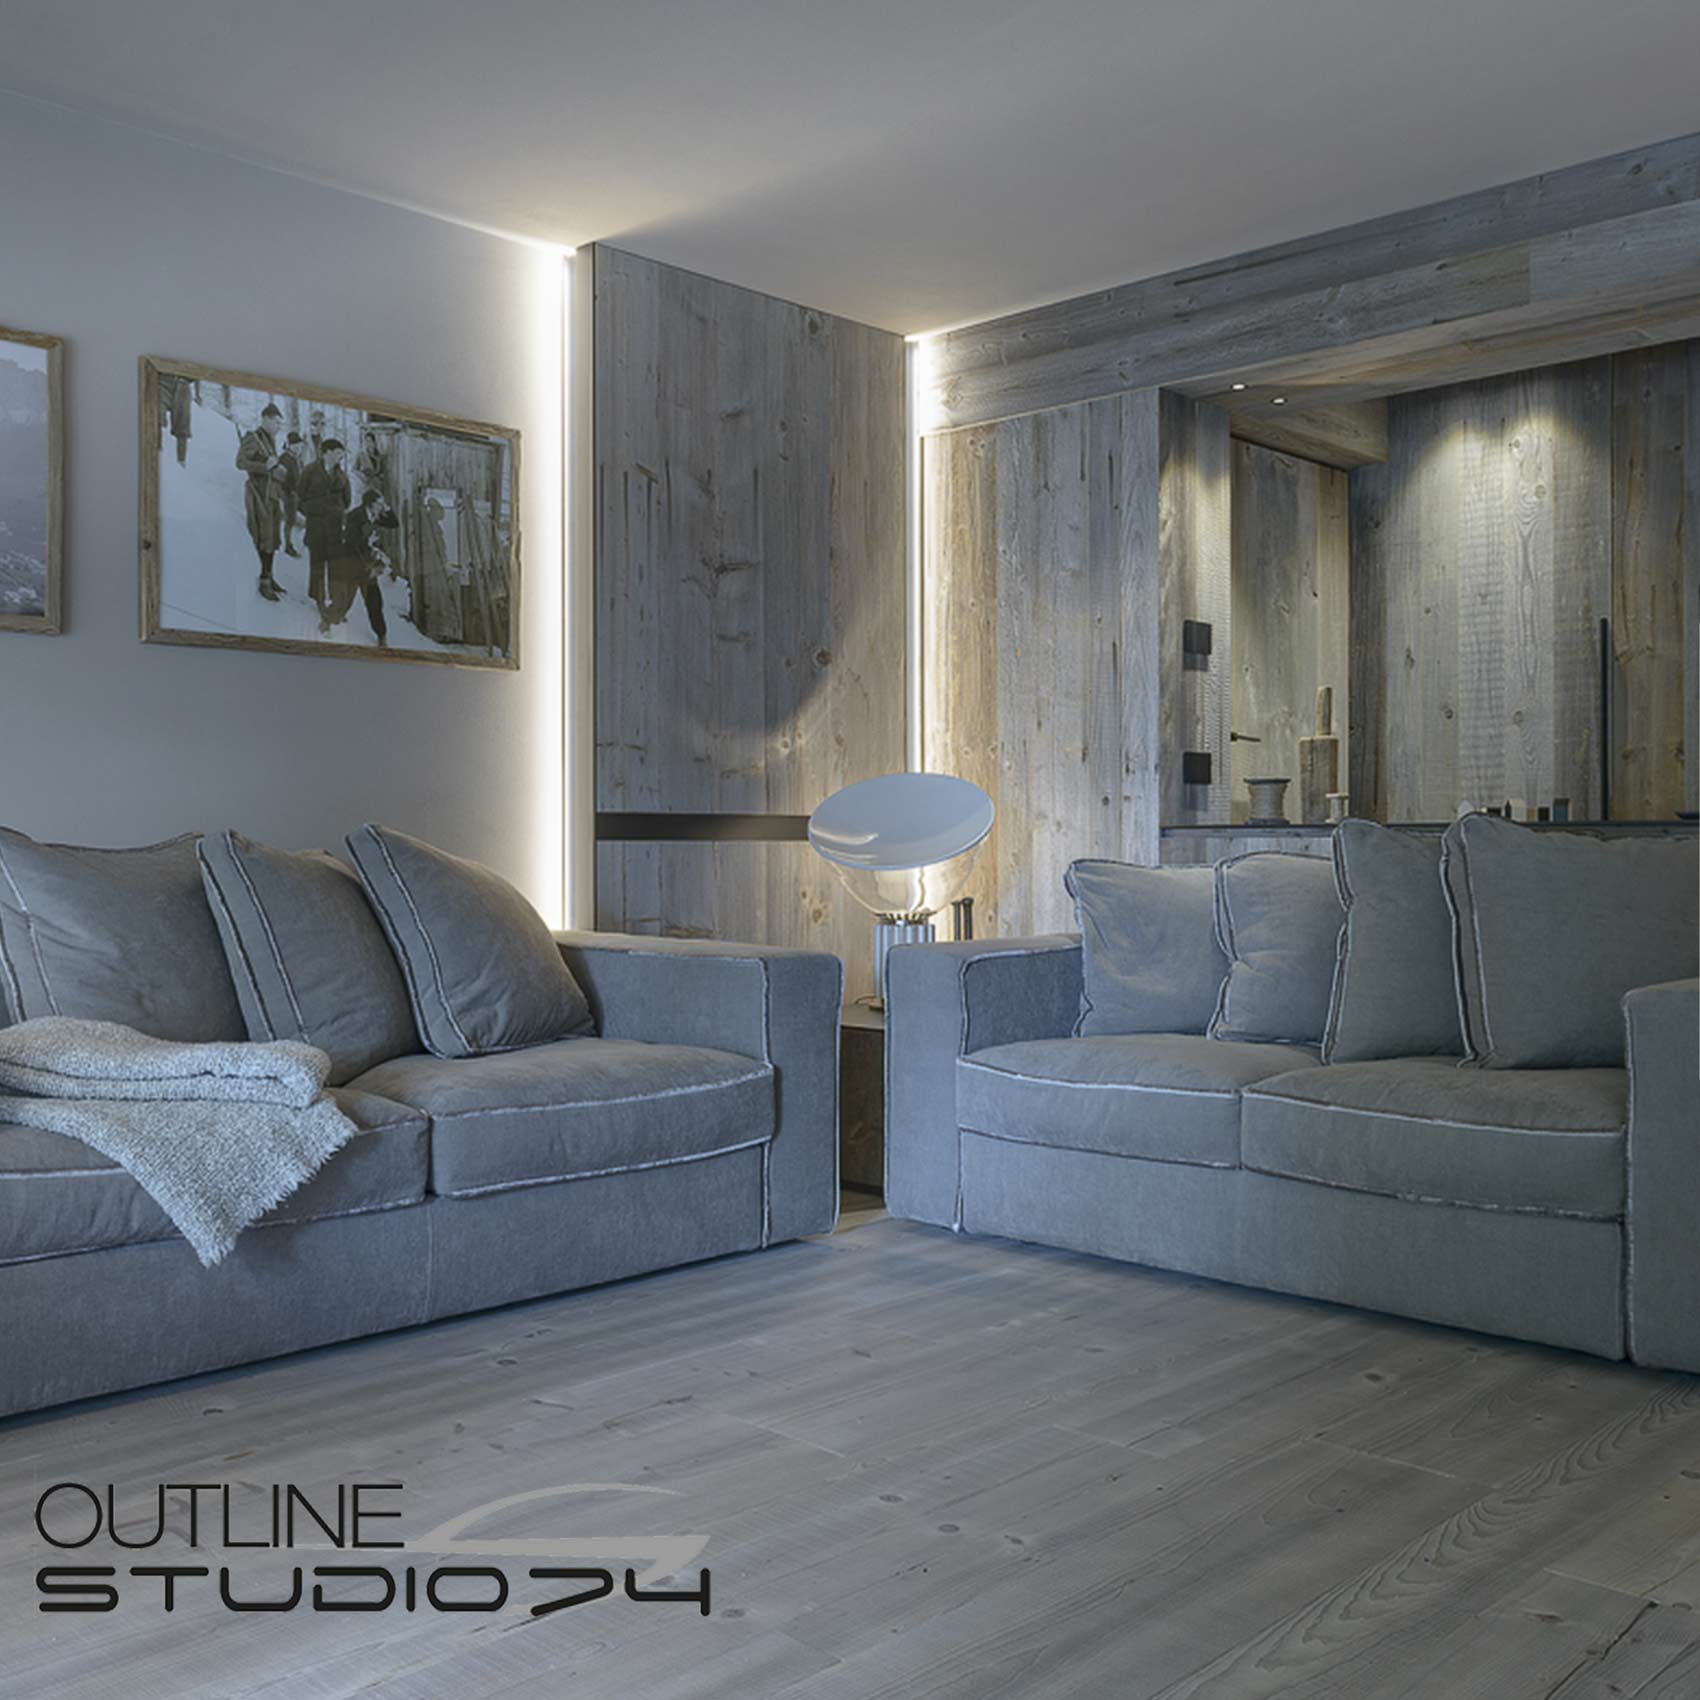 Casa a Cortina - Outline Studio 74